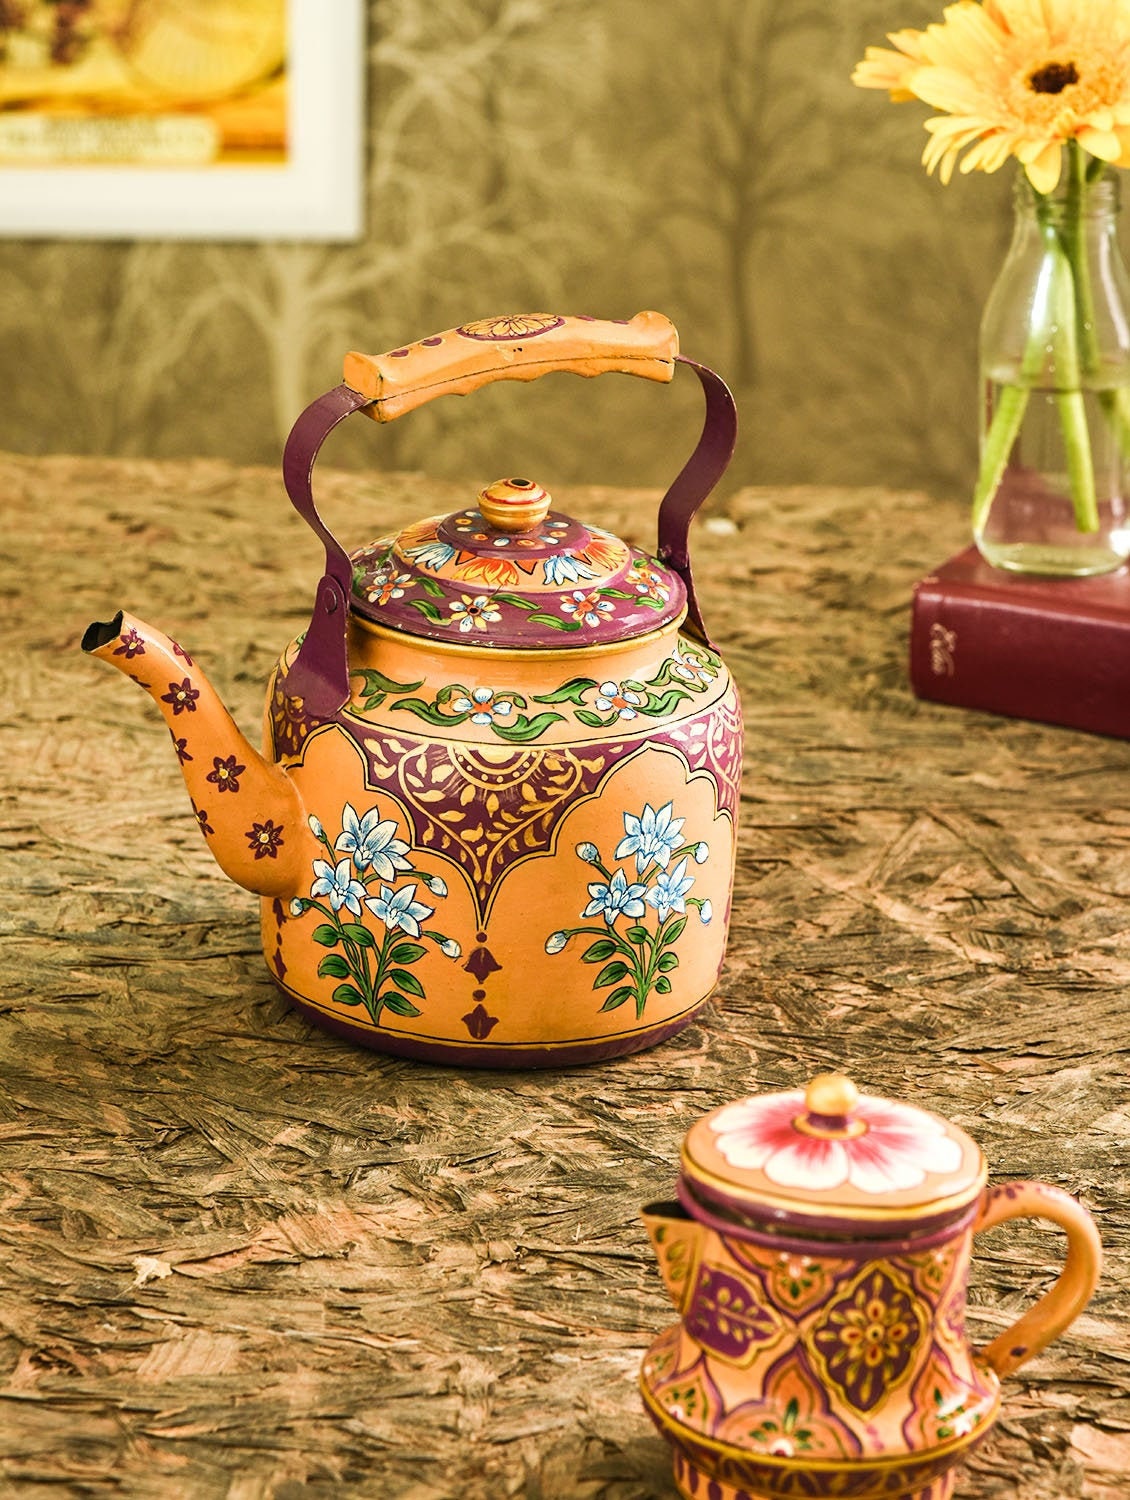 Hand Painted Tea Pot, Kaushalam Tea Kettle, Chai Kettle